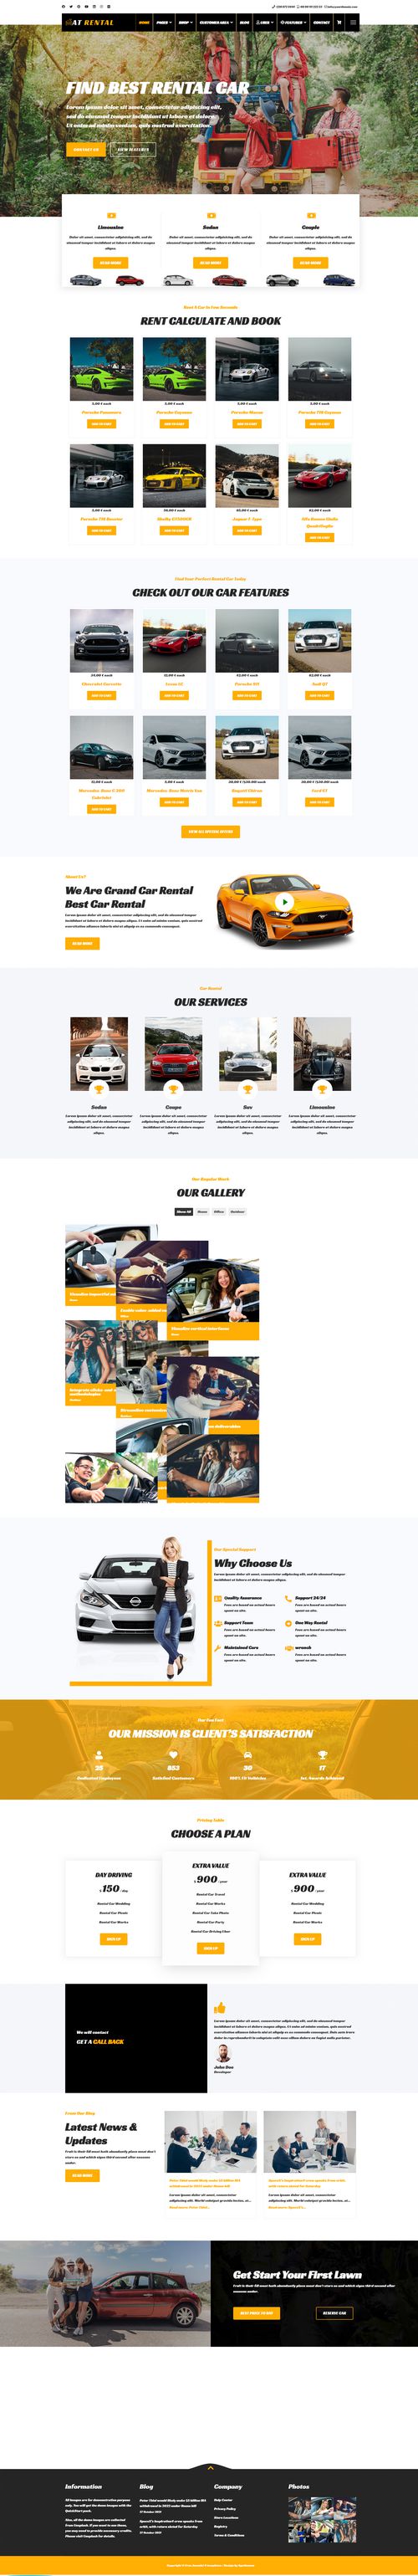 Rental - Responsive Joomla Car Rental Website template